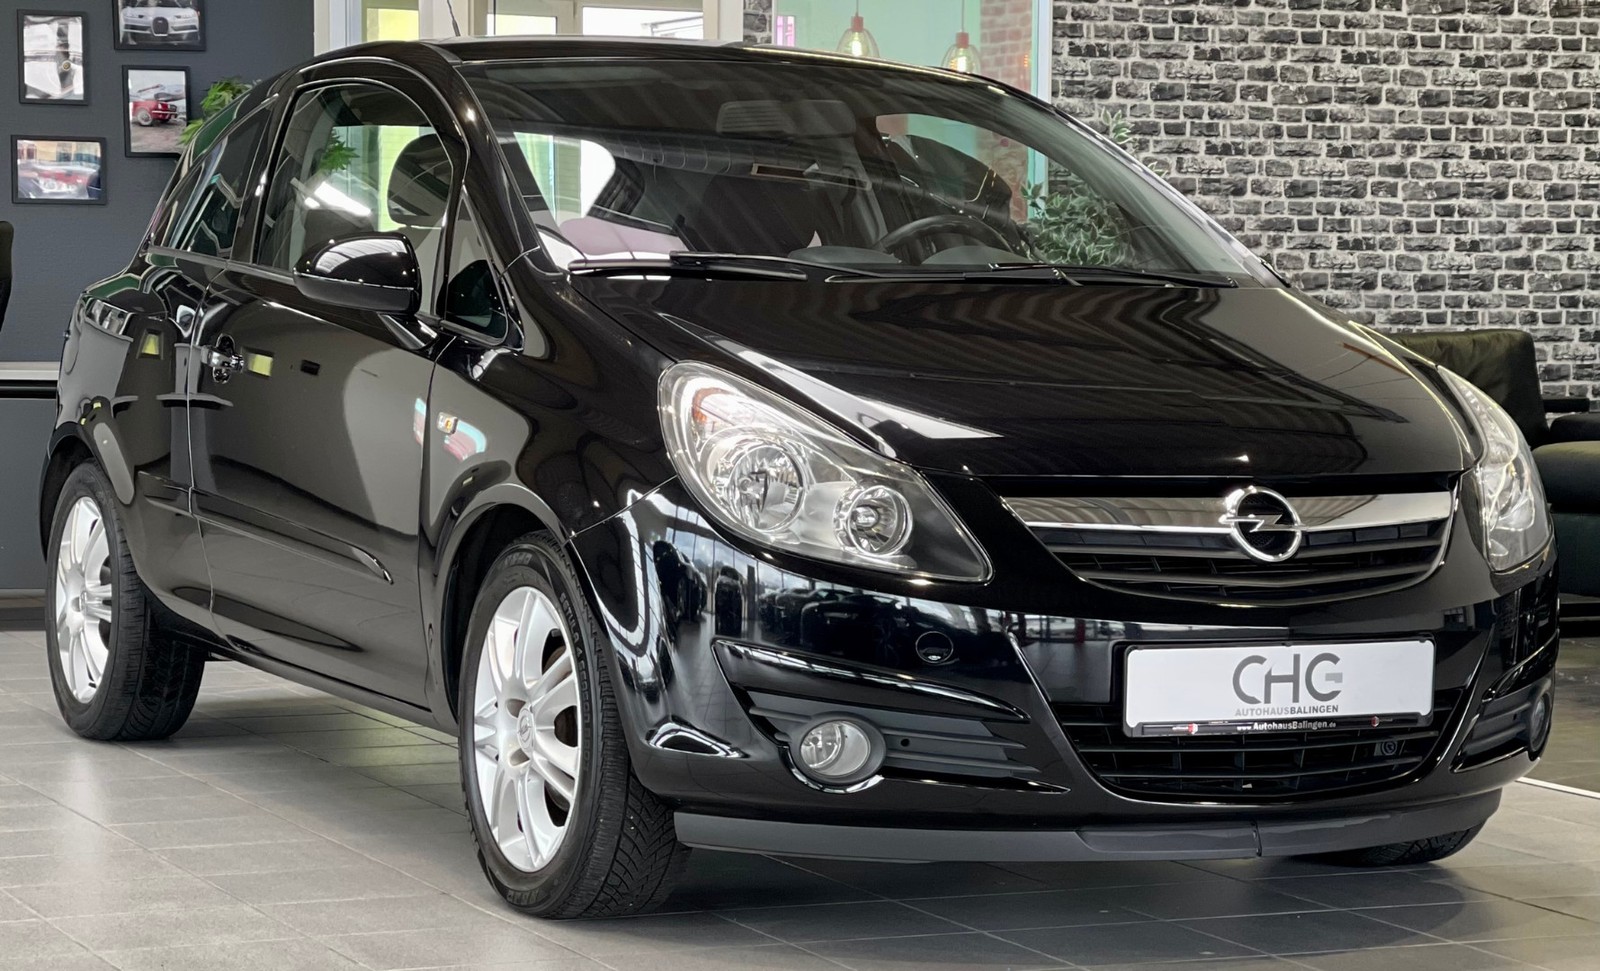 Opel Corsa D gebraucht kaufen in Balingen Preis 4990 eur - Int.Nr